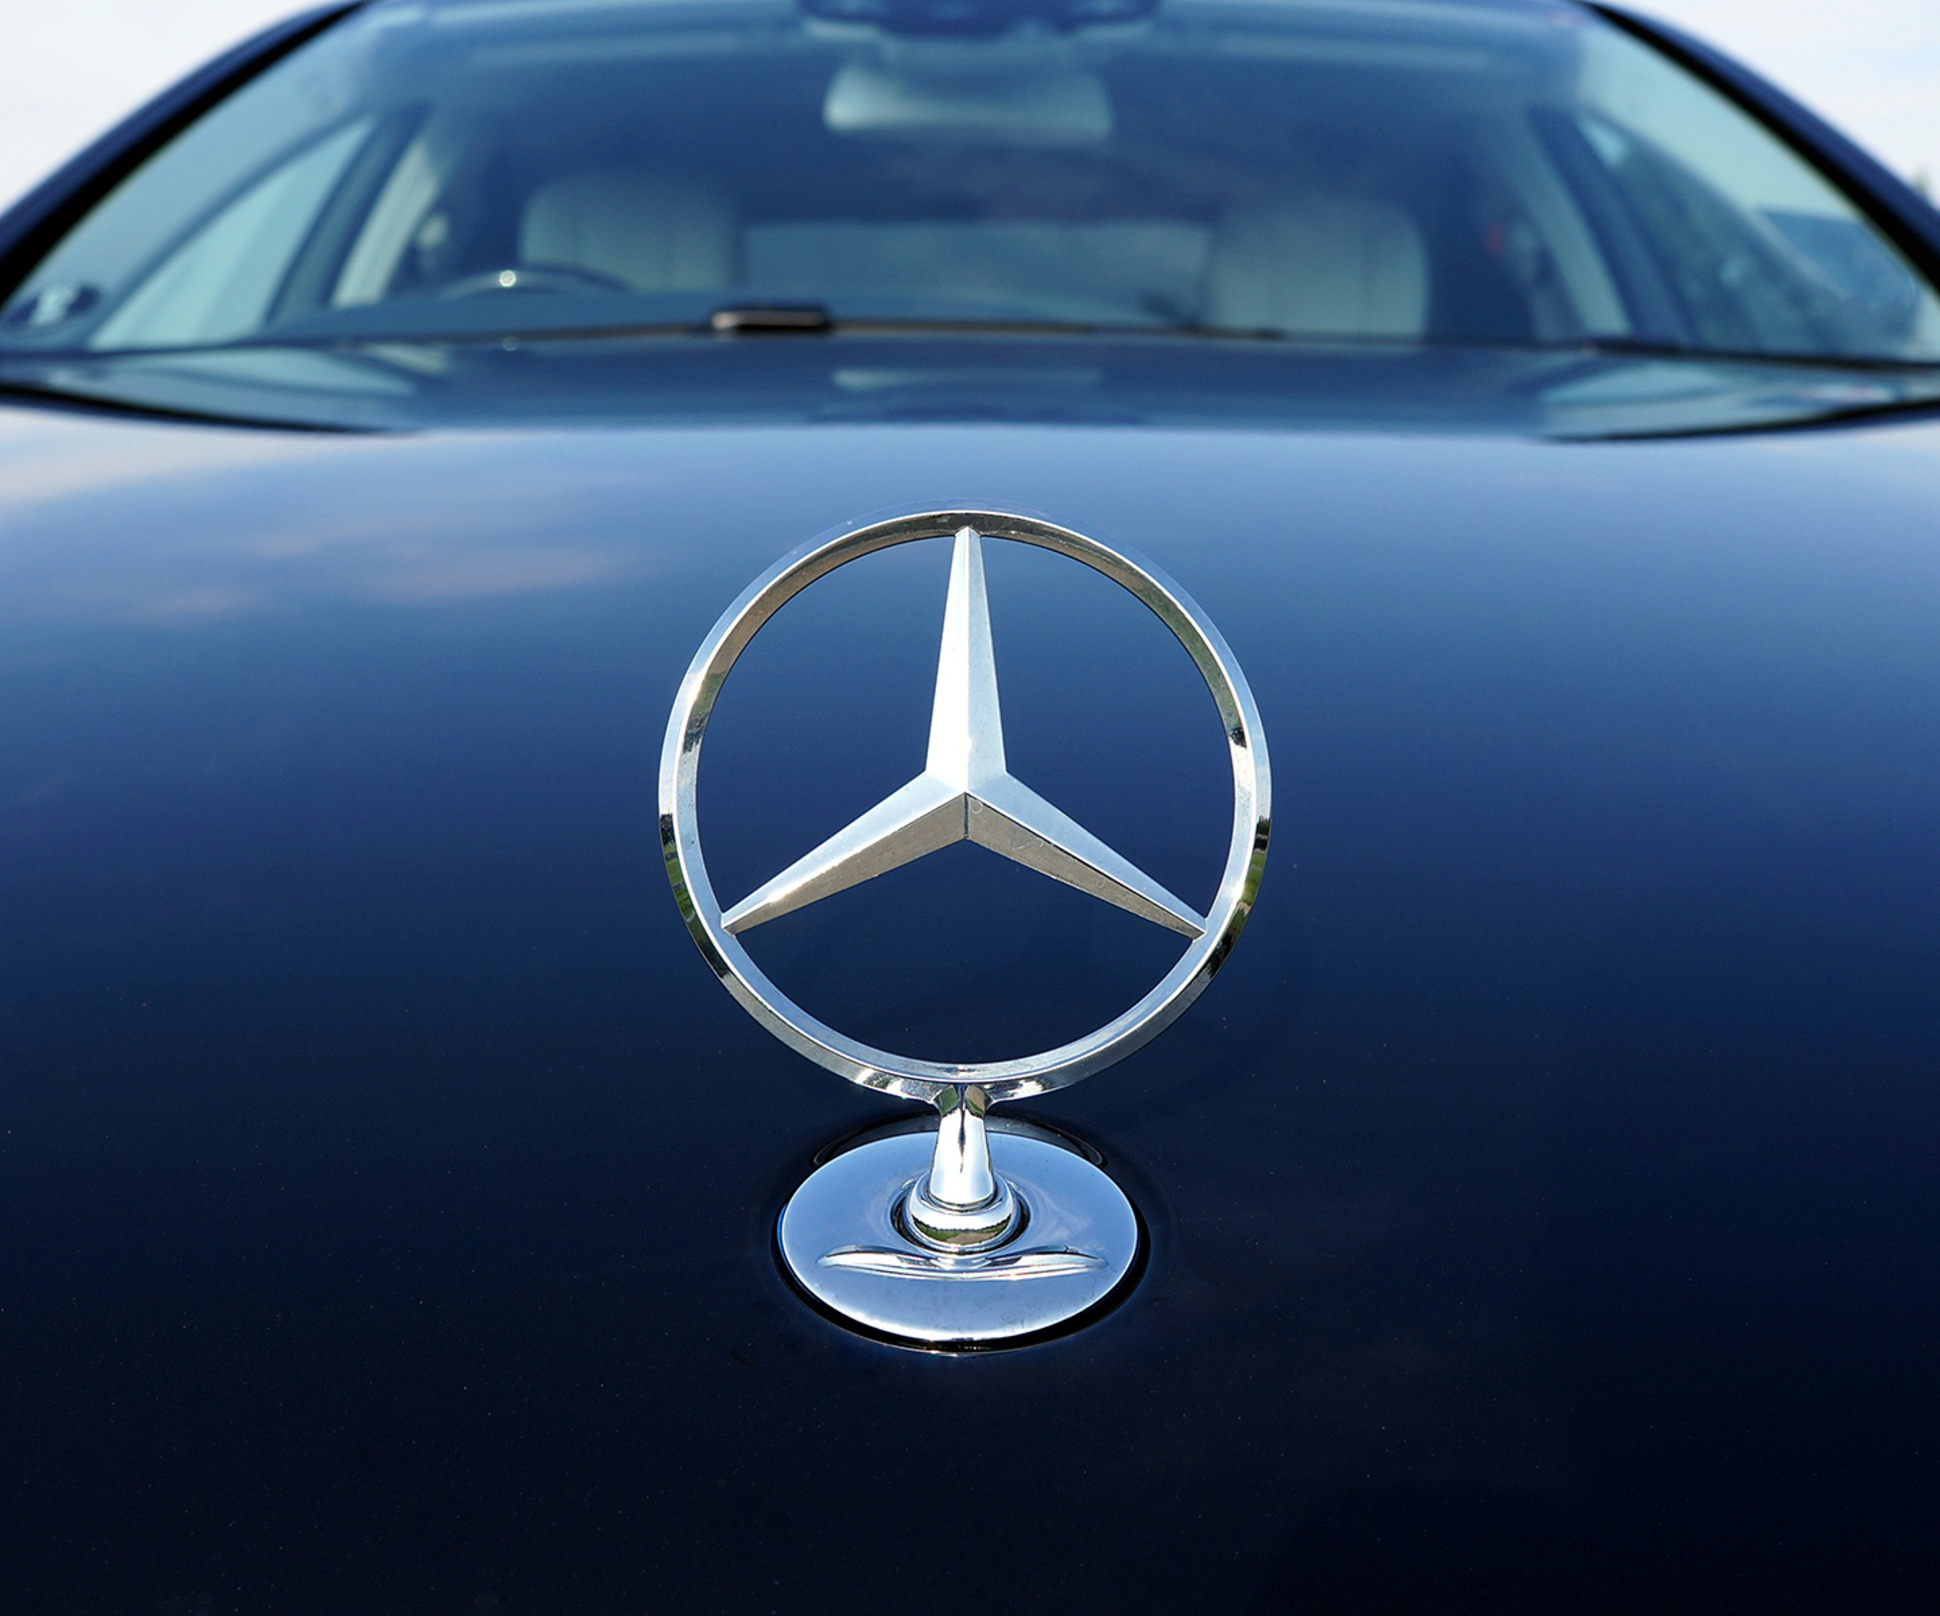   Mercedes-Benz   Motor